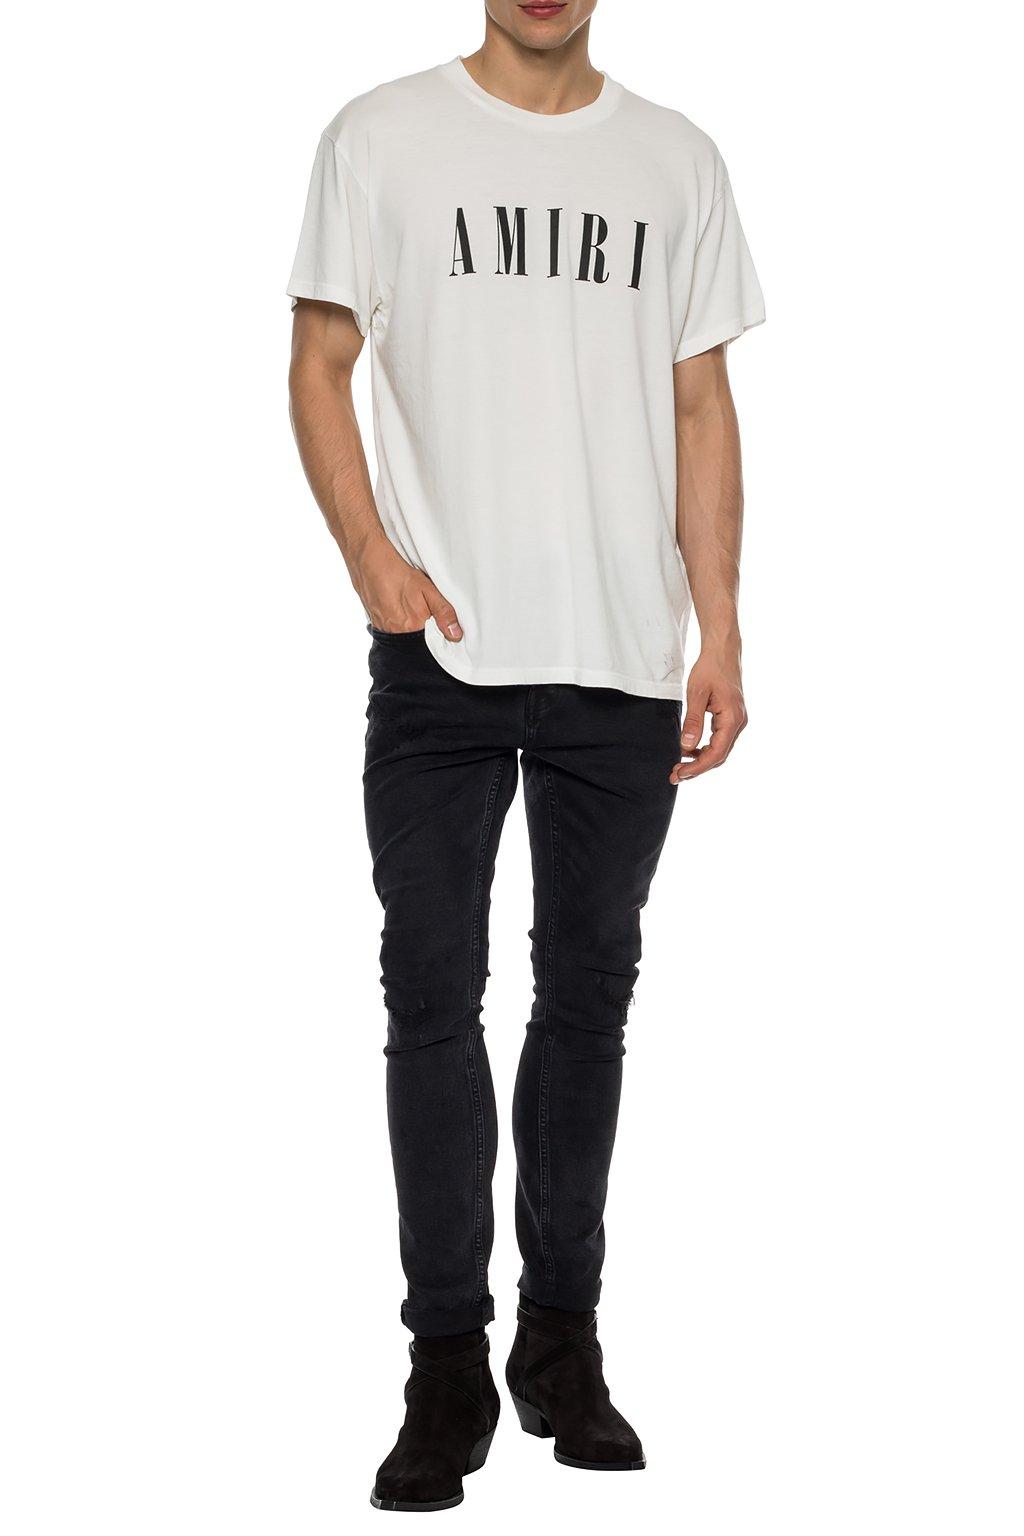 Amiri Cotton Logo-printed T-shirt in Grey Black White (White) for Men ...